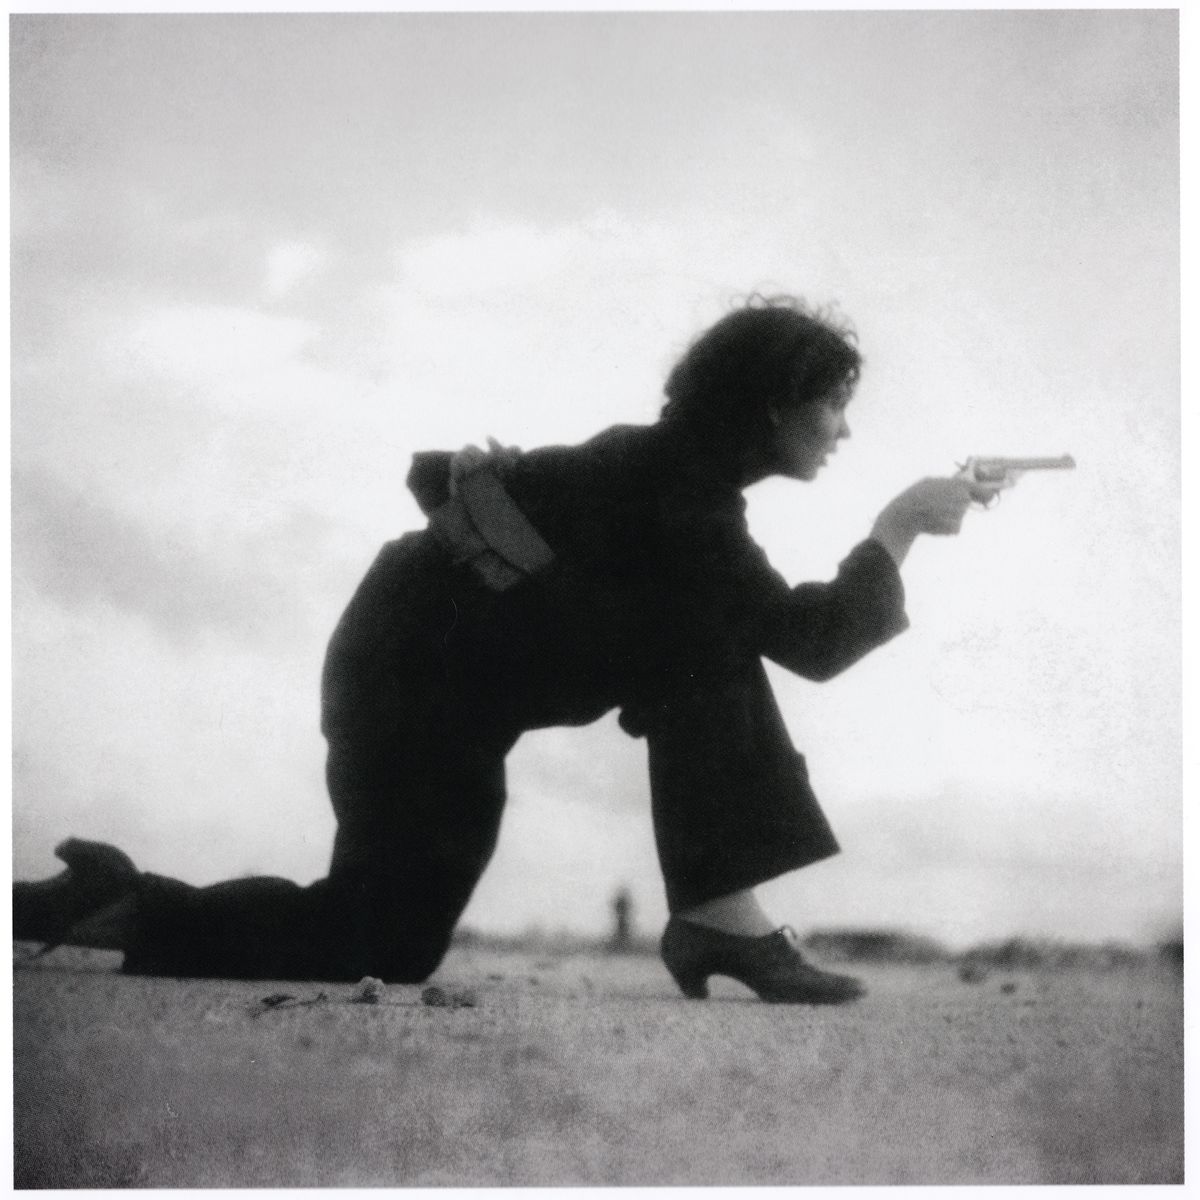 Republican Militia woman training on the beach outside Barcelona by Gerda Taro - August 1936